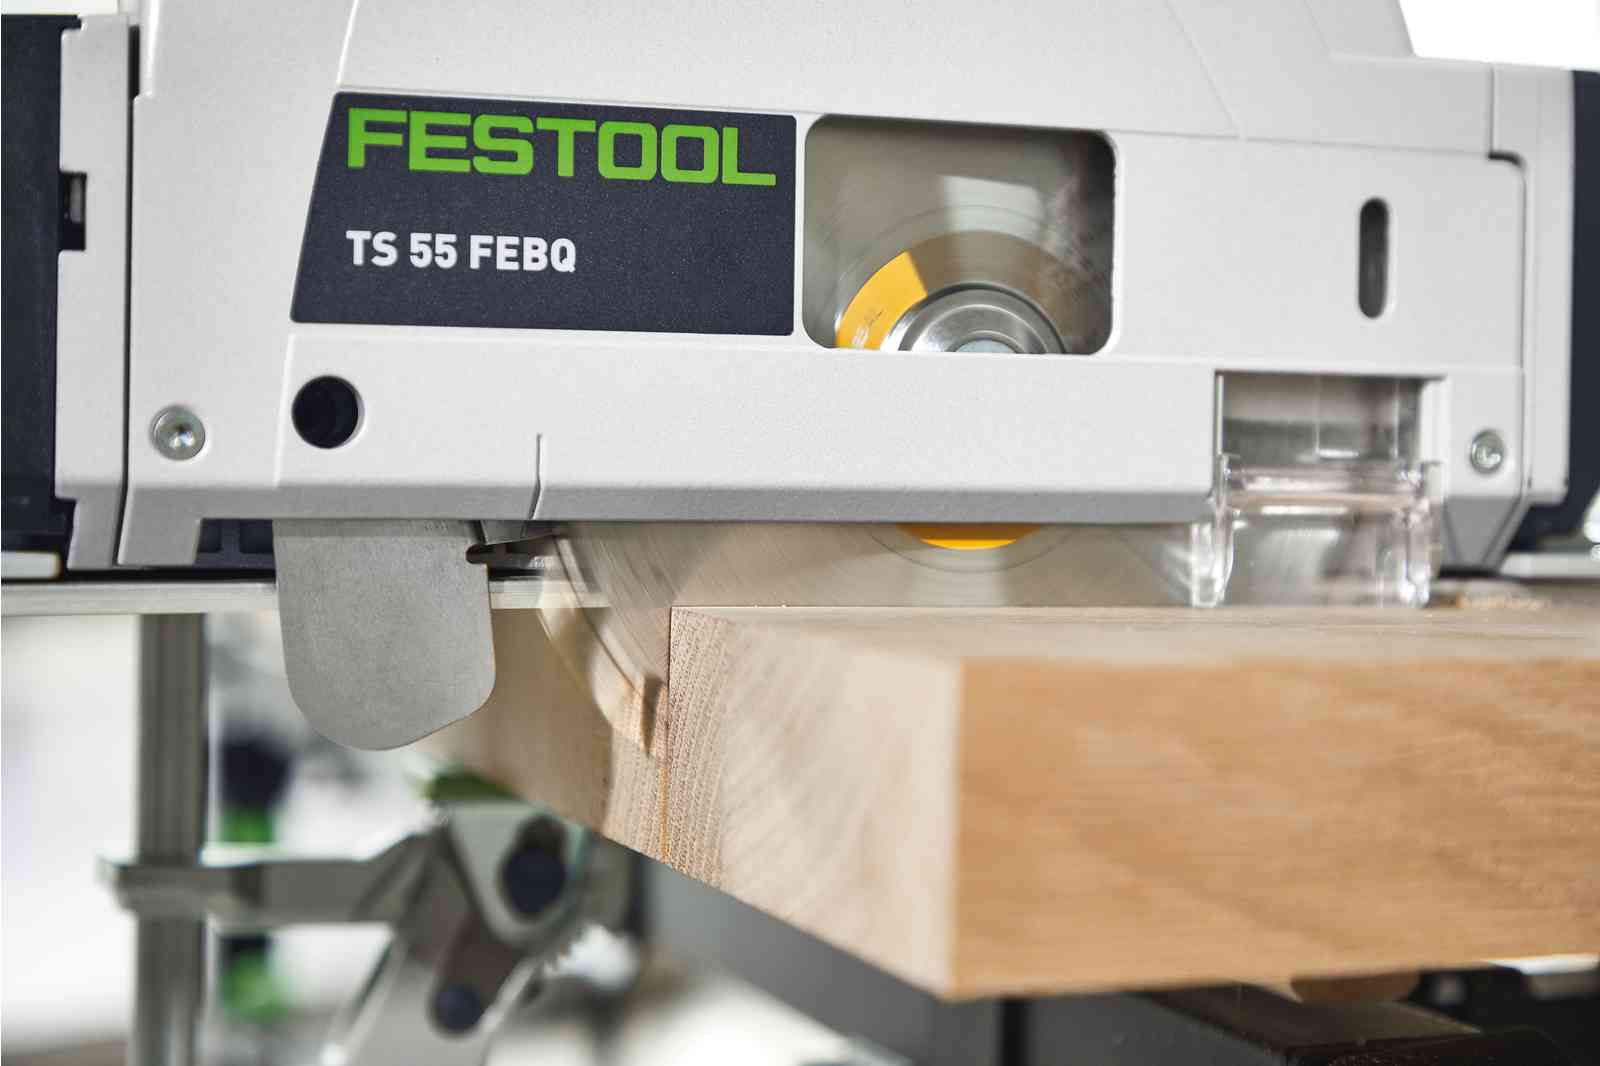 Festool Tauchsäge TS 55 FEBQ-Plus